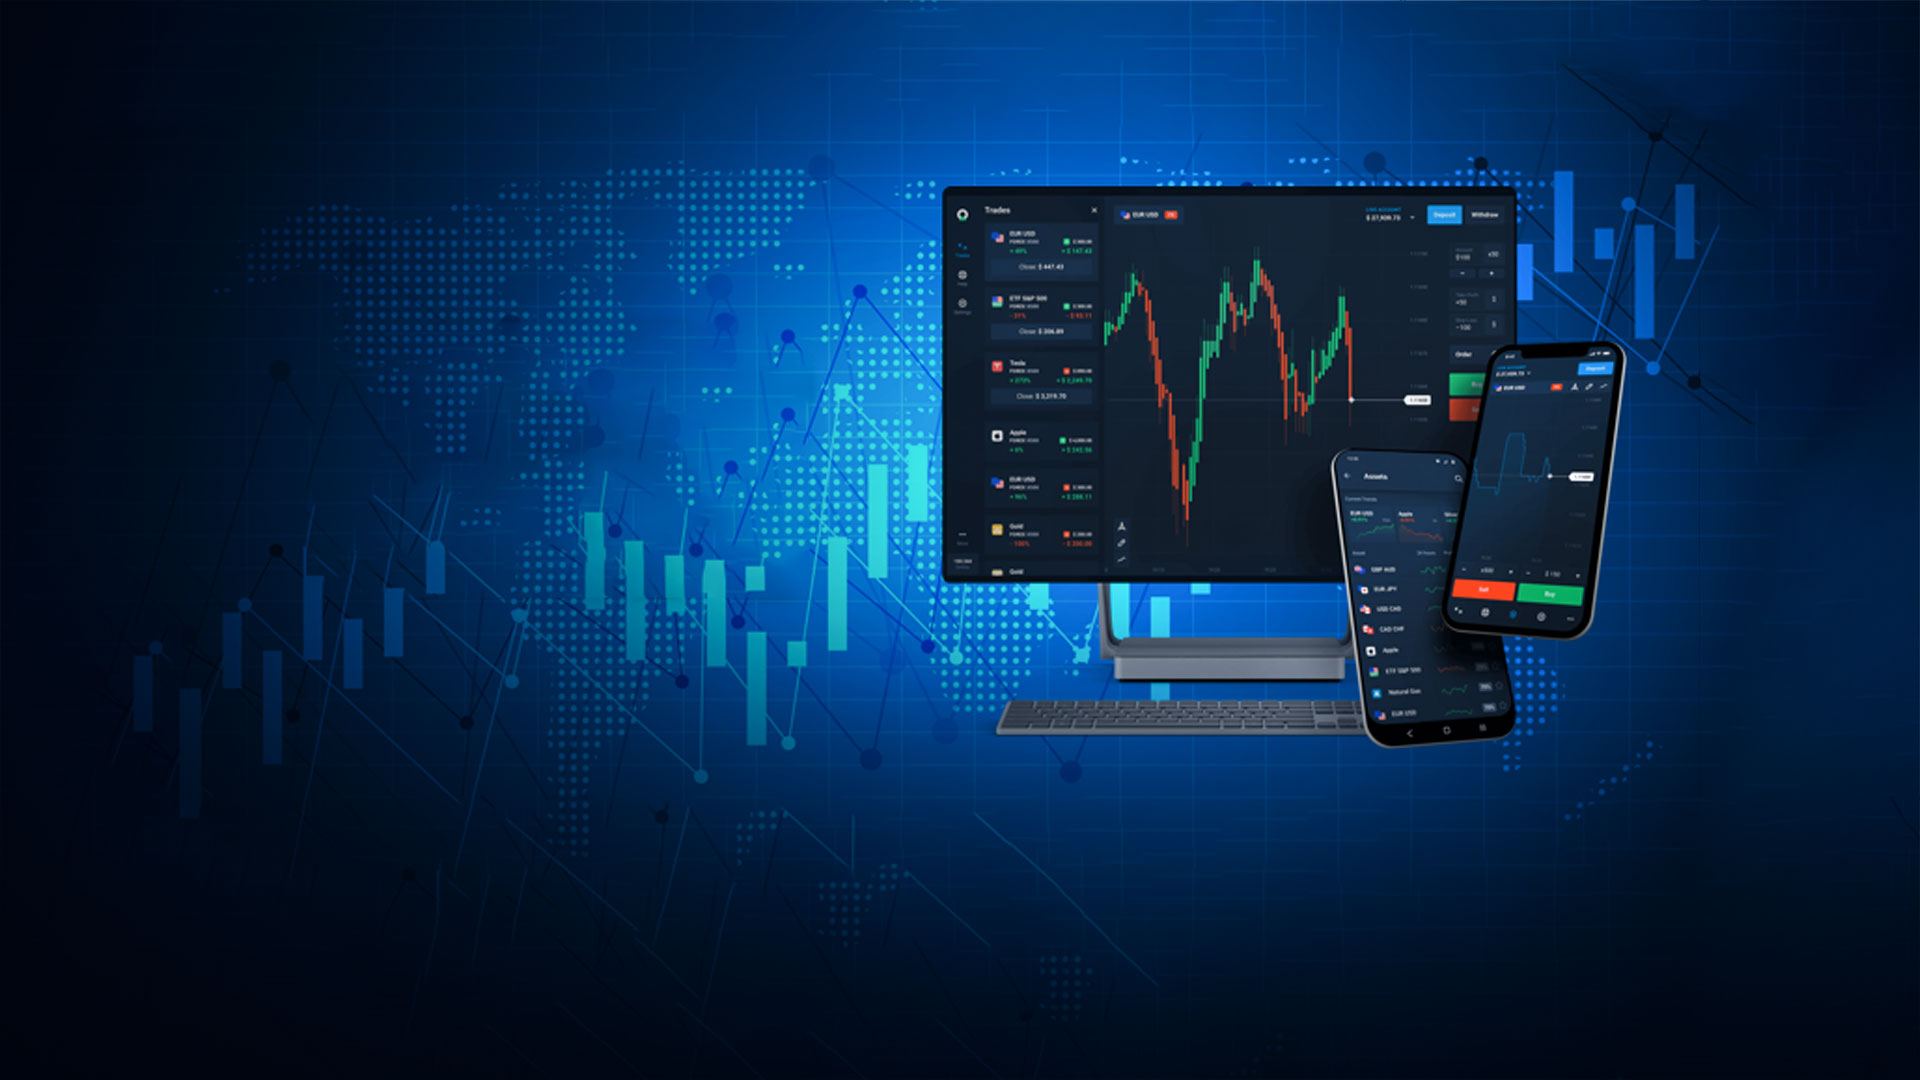 Olymp Trade – Online Trading App